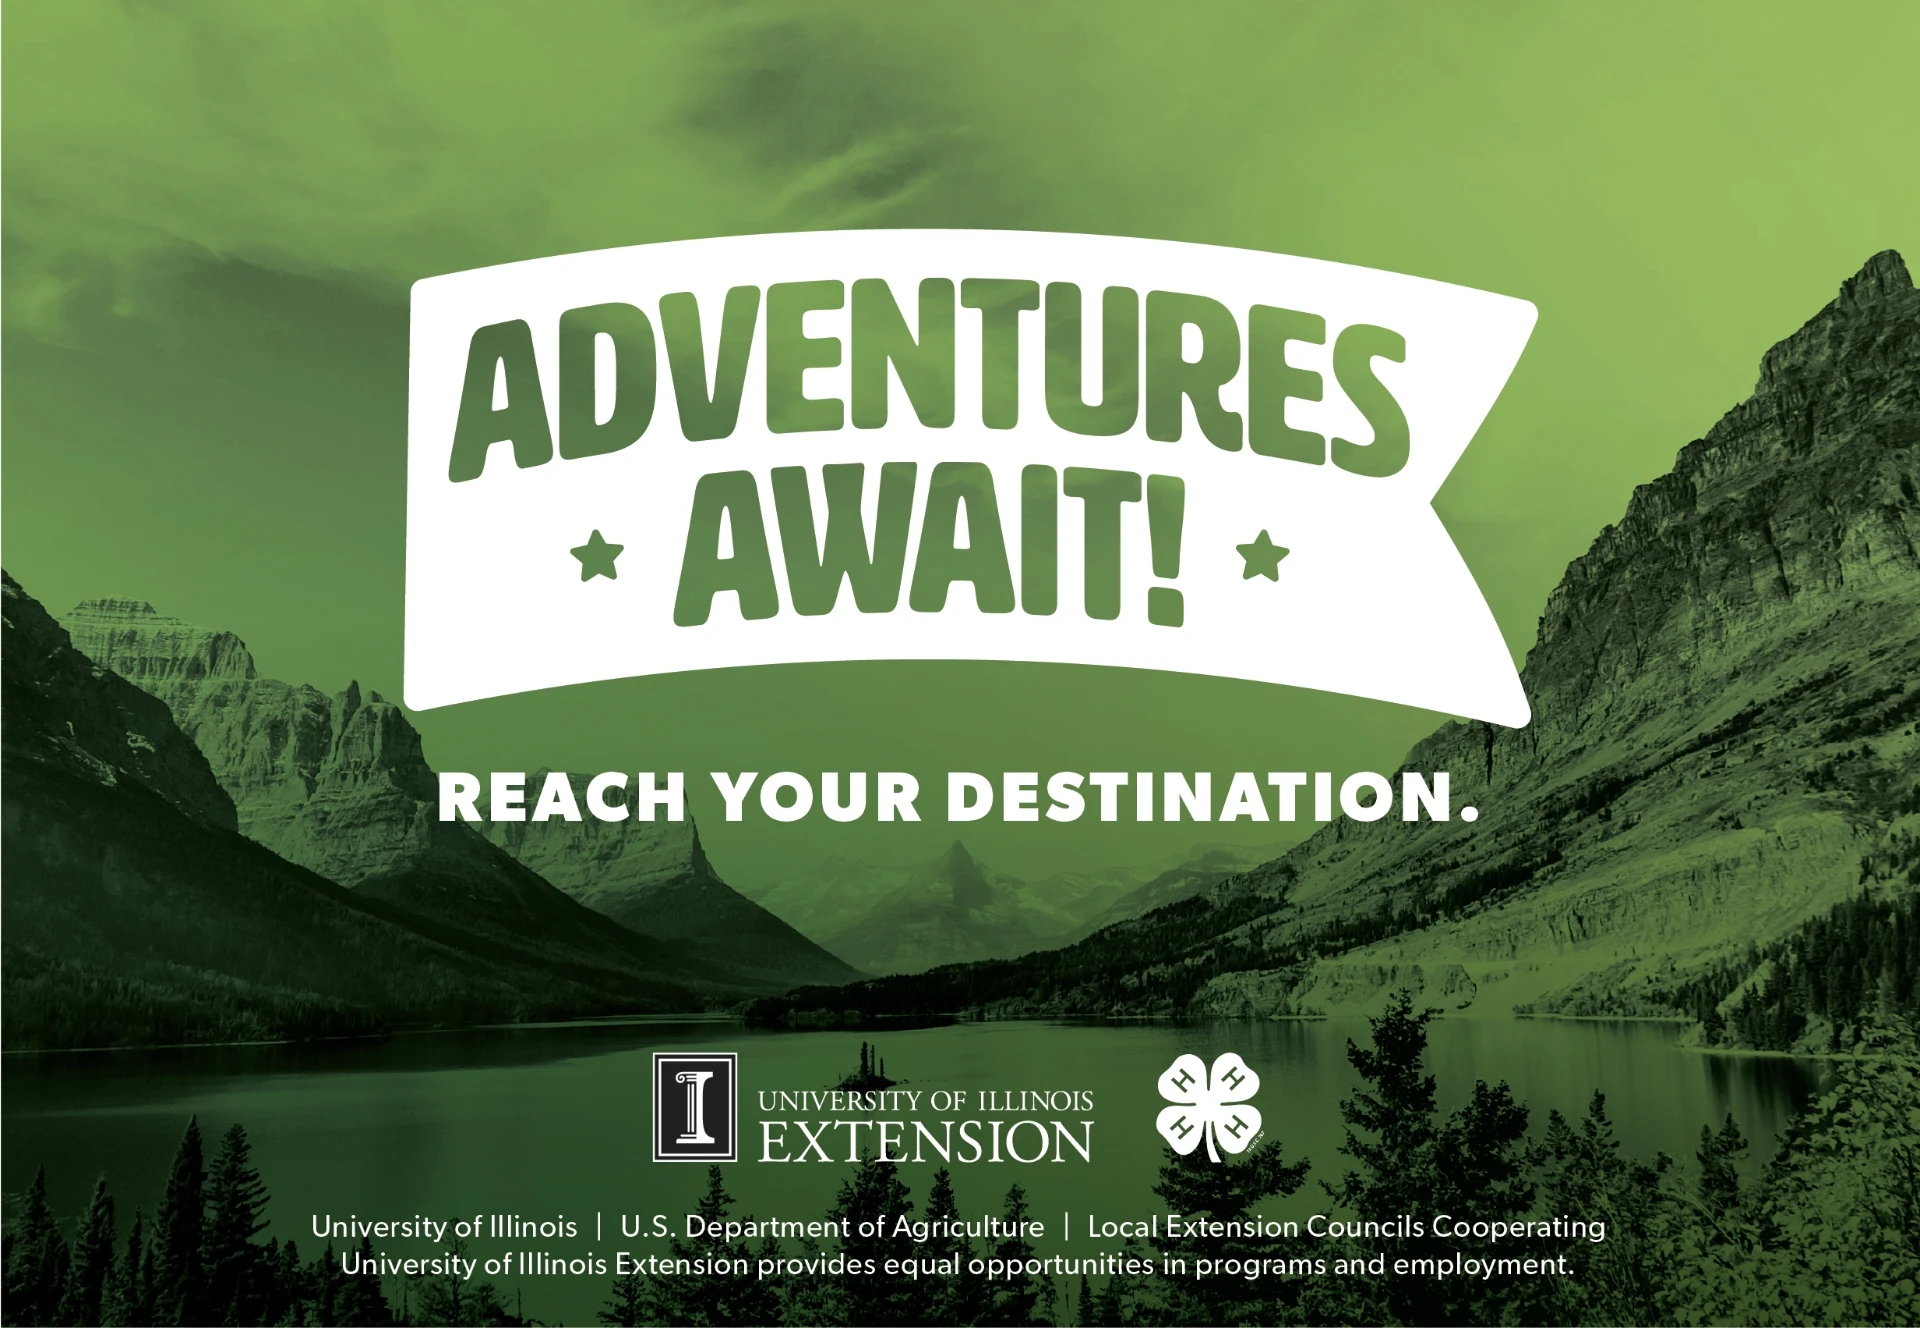 Adventures await reach your destination.